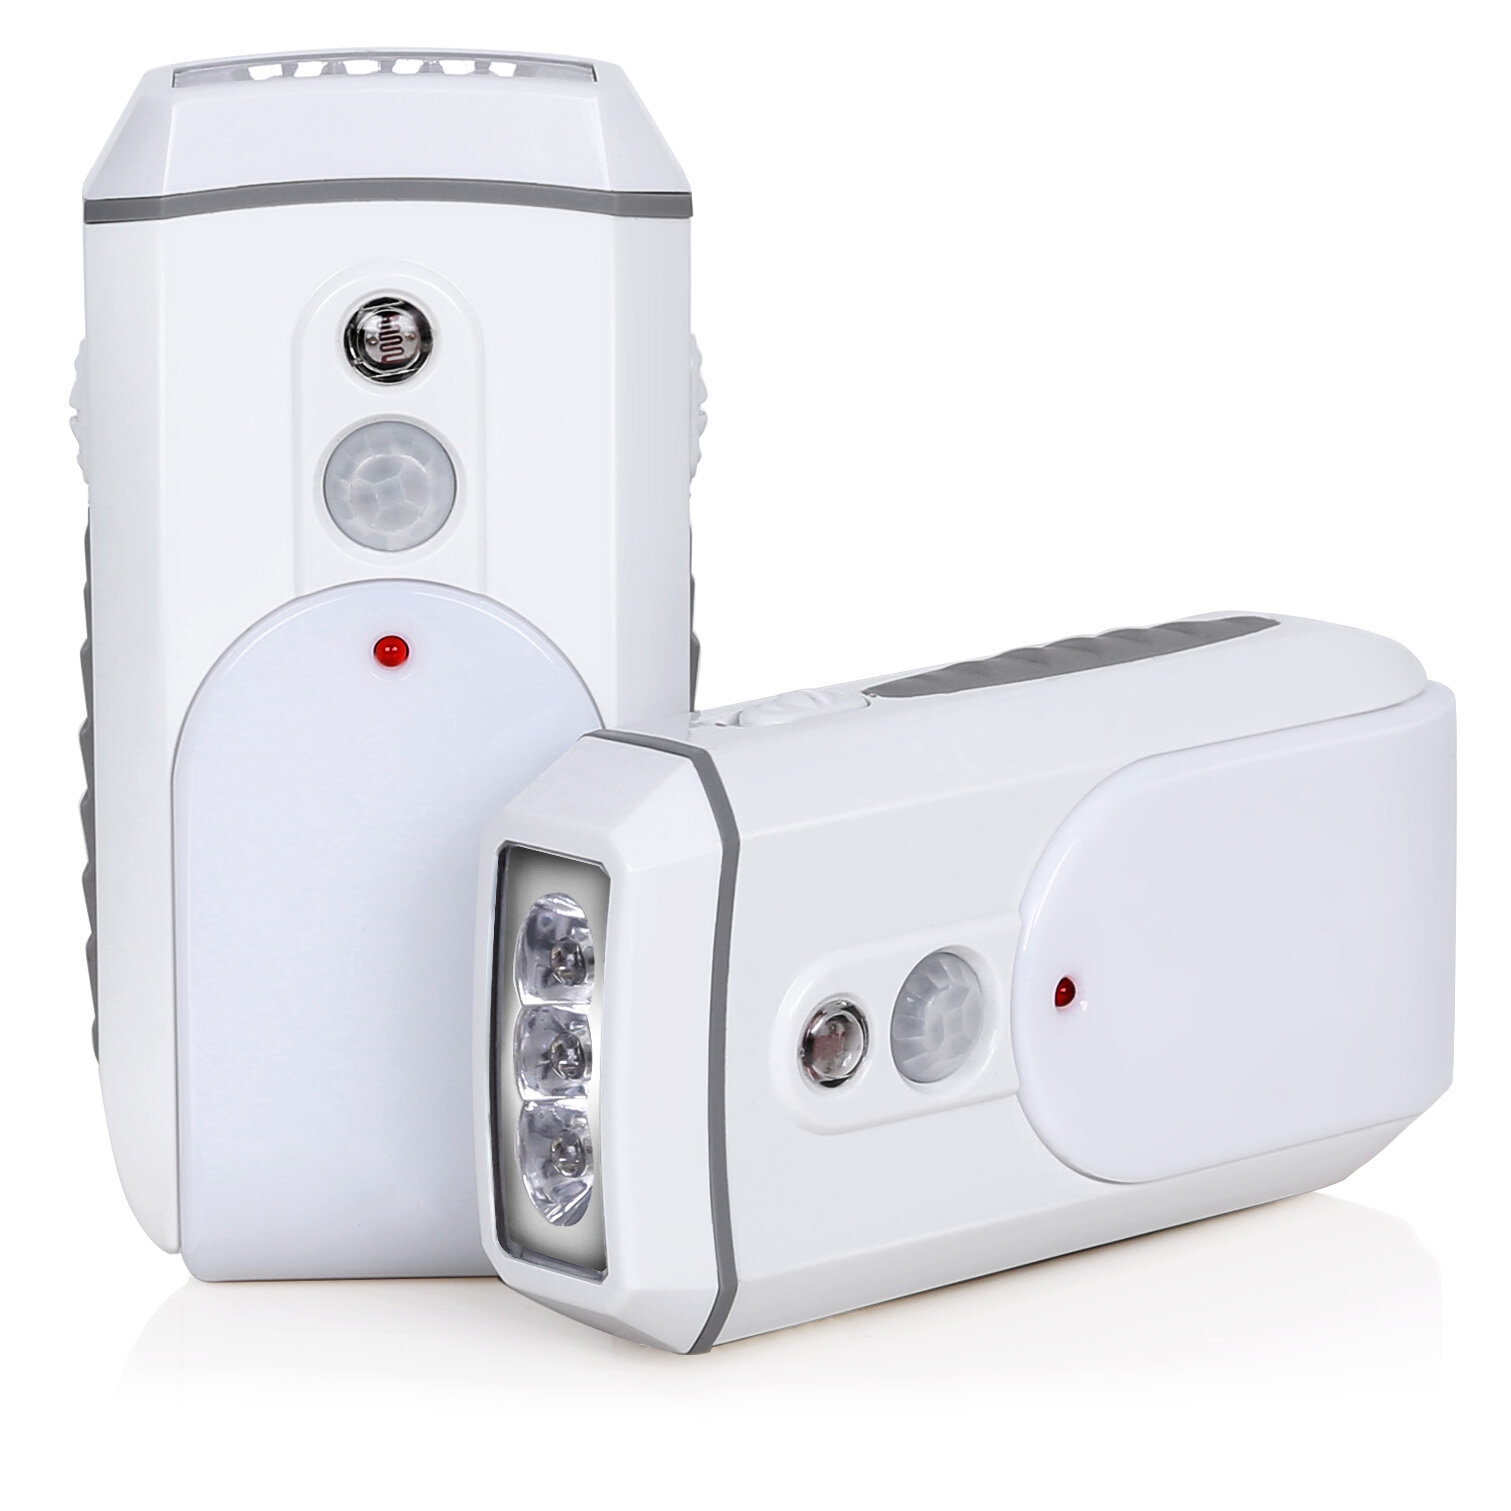 Automatic Warm White LED Nightlight DEWENWILS Plug-in Motion Sensor Night Light 